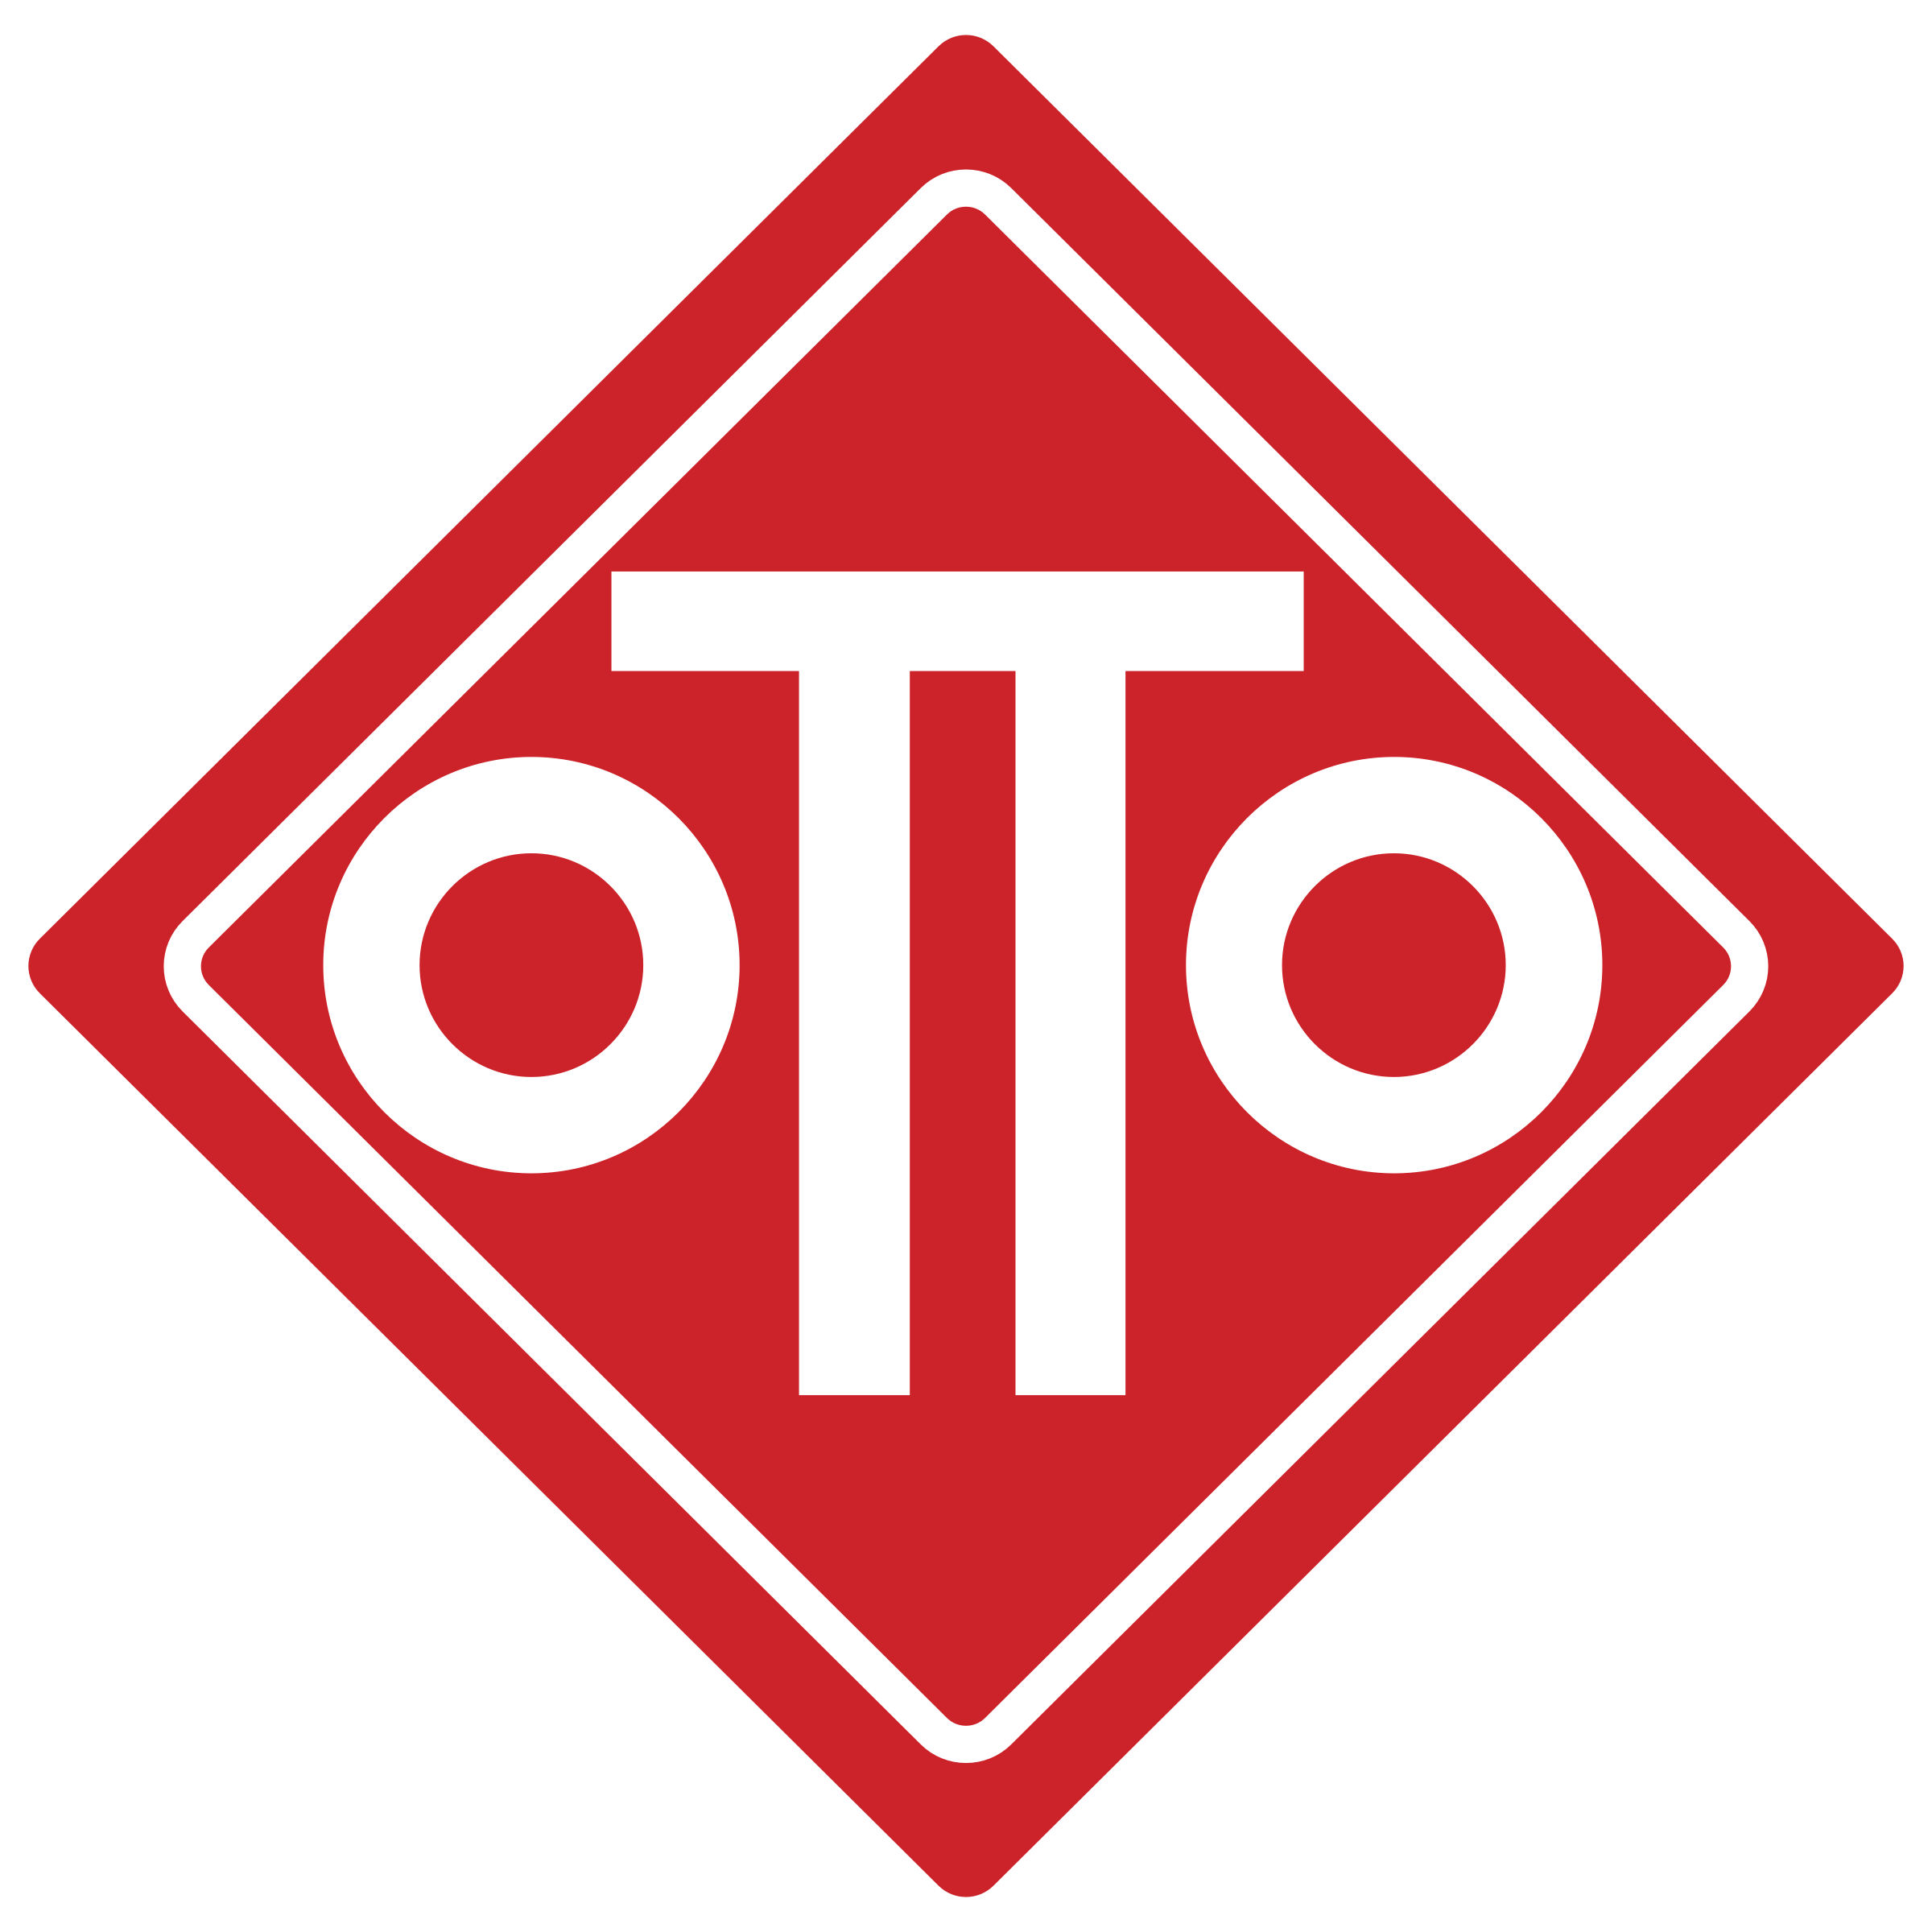 Otto Logo - Otto Logo PNG Transparent & SVG Vector - Freebie Supply